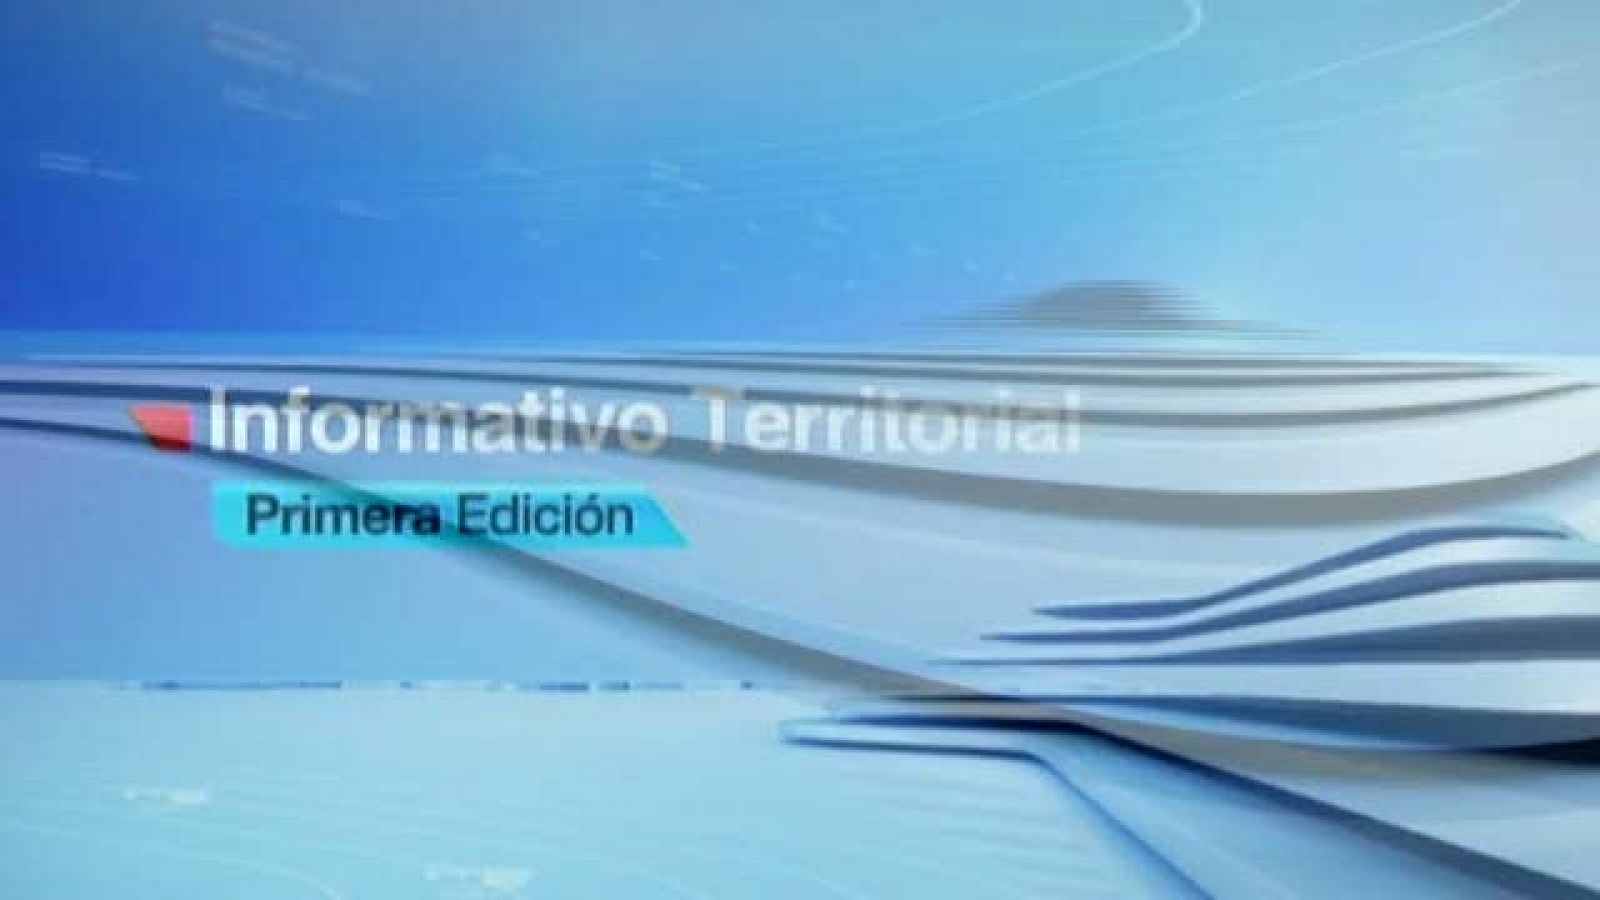 Noticias de Extremadura: Noticias de Extremadura - 18/06/19 | RTVE Play